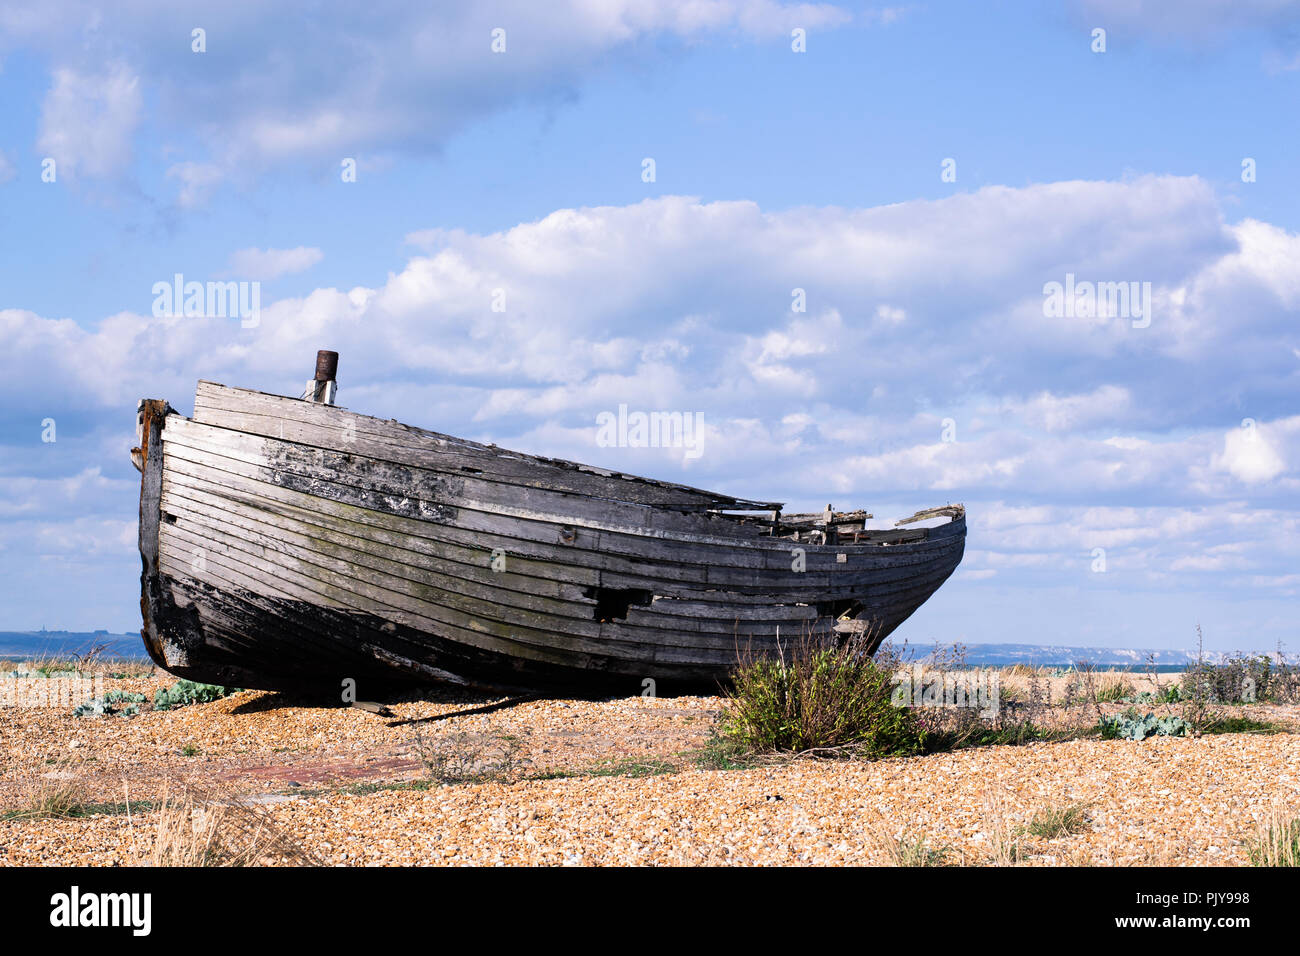 Boatwreck on a shingle beach Stock Photo